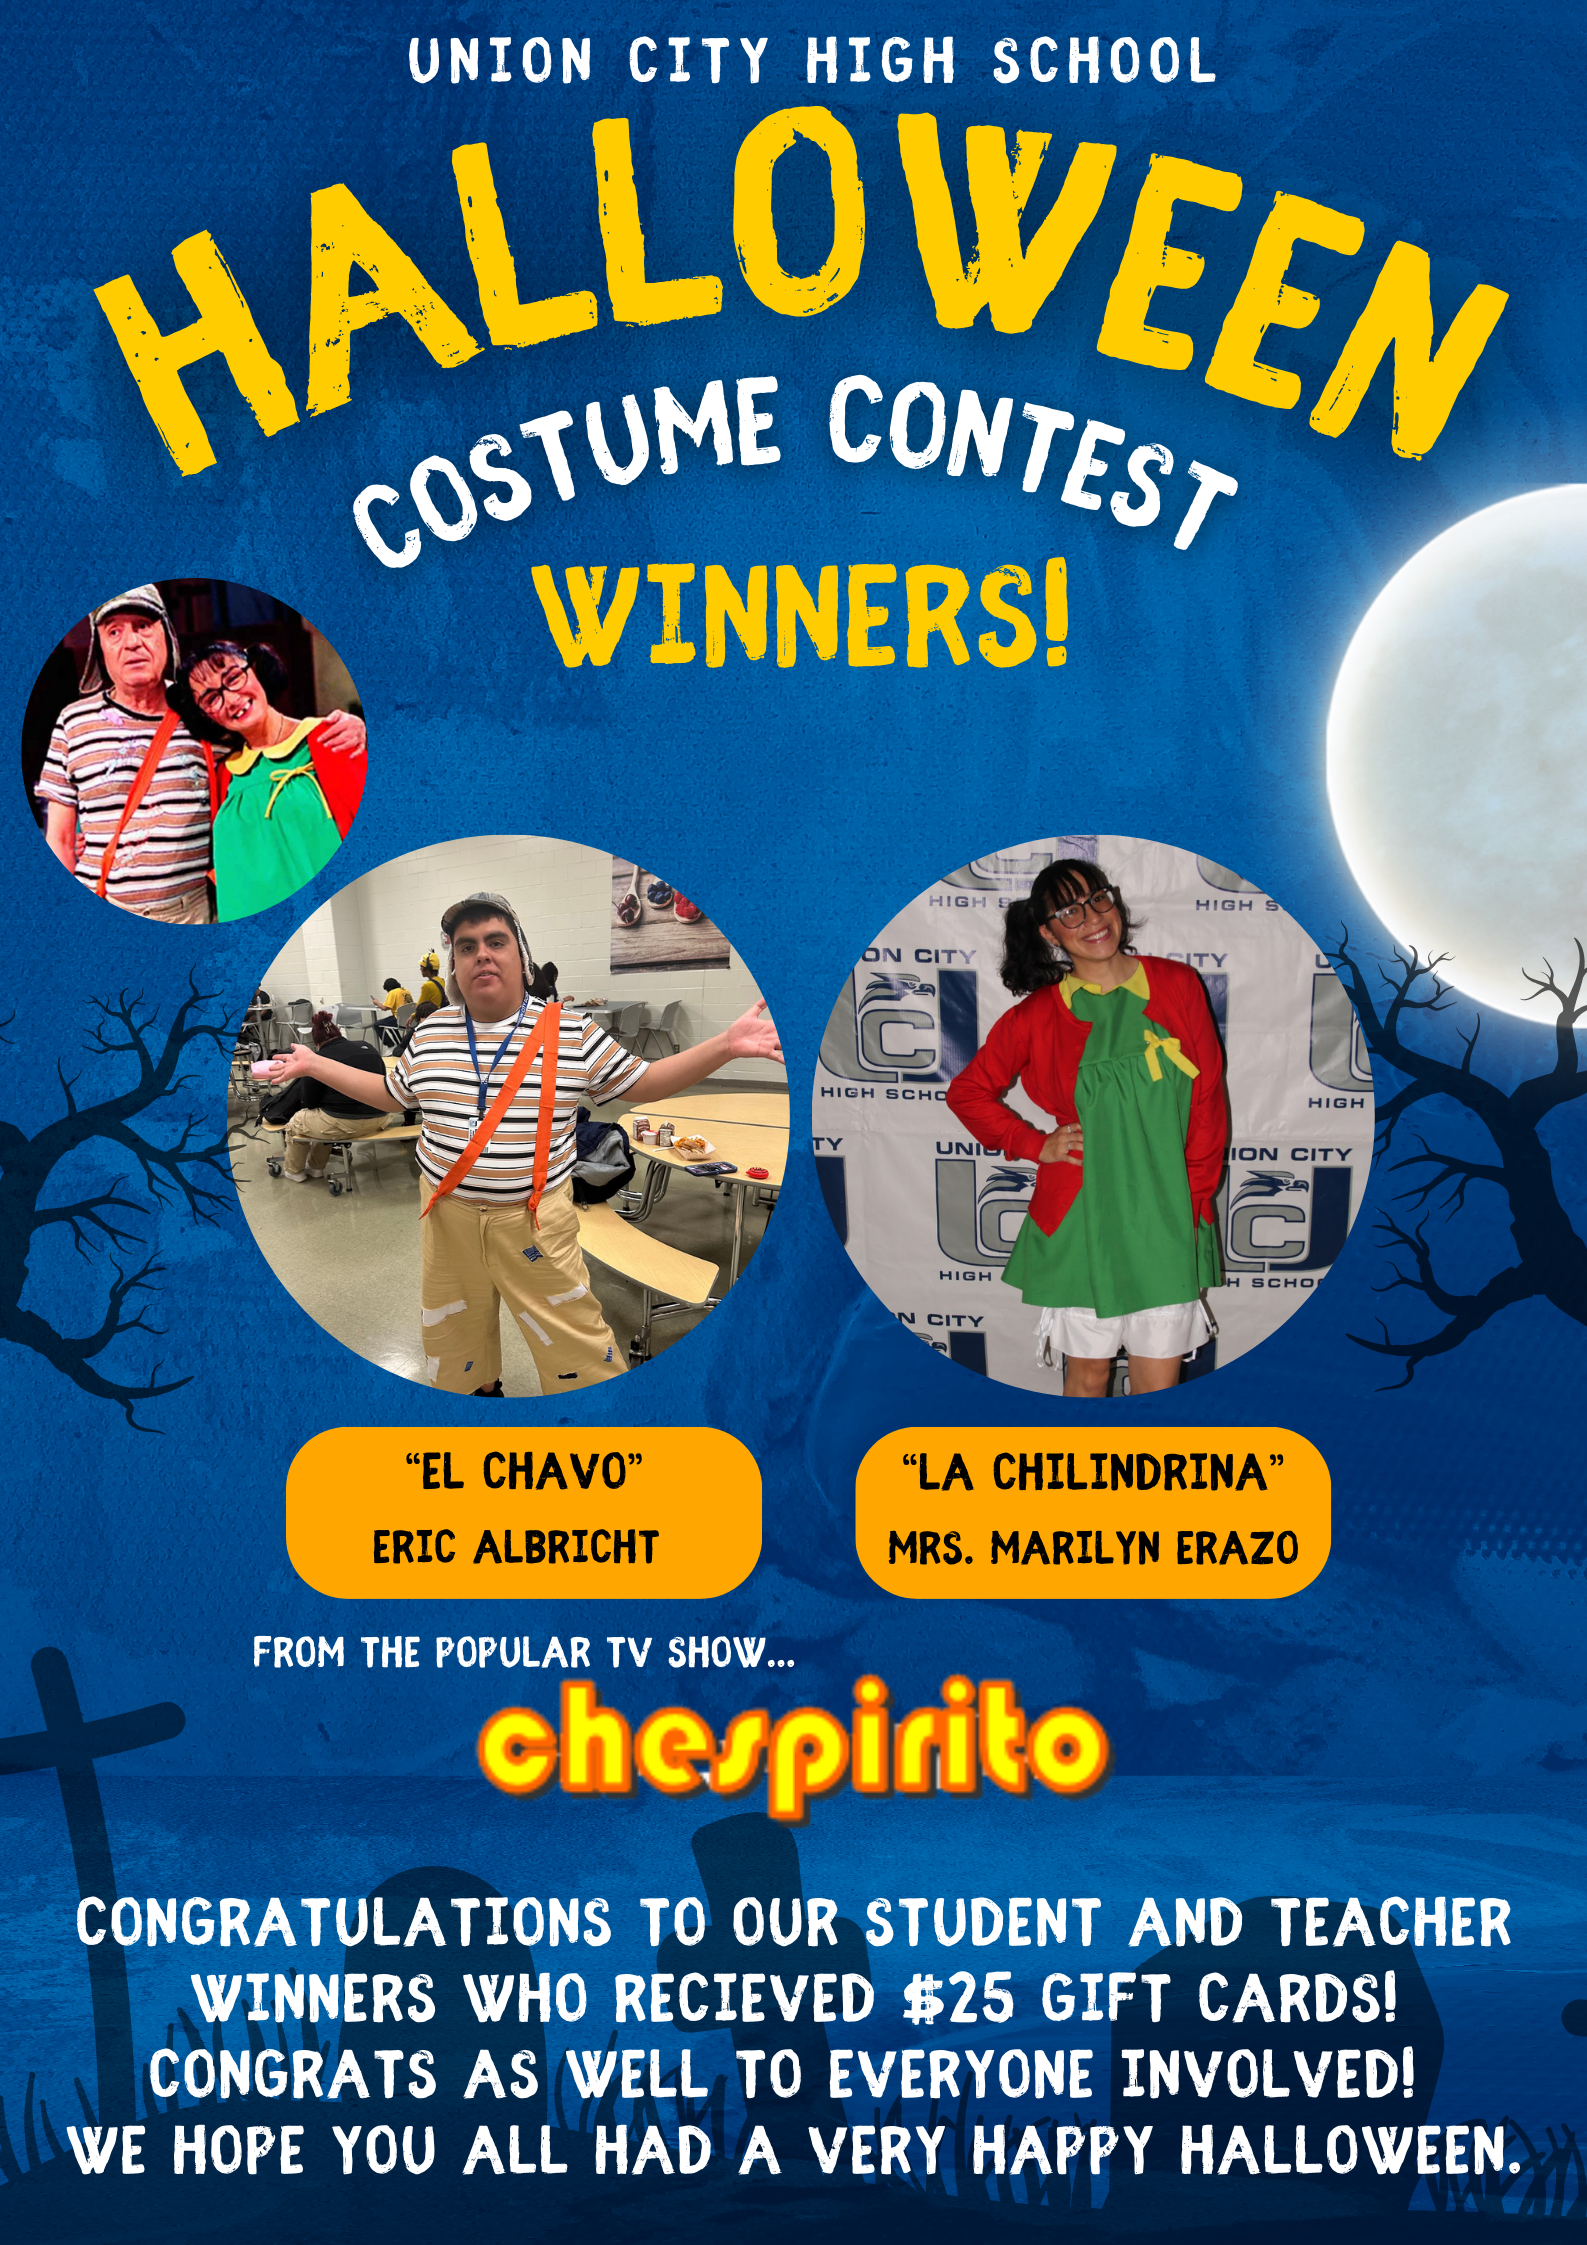 UCHS Halloween Costume Contest Winners